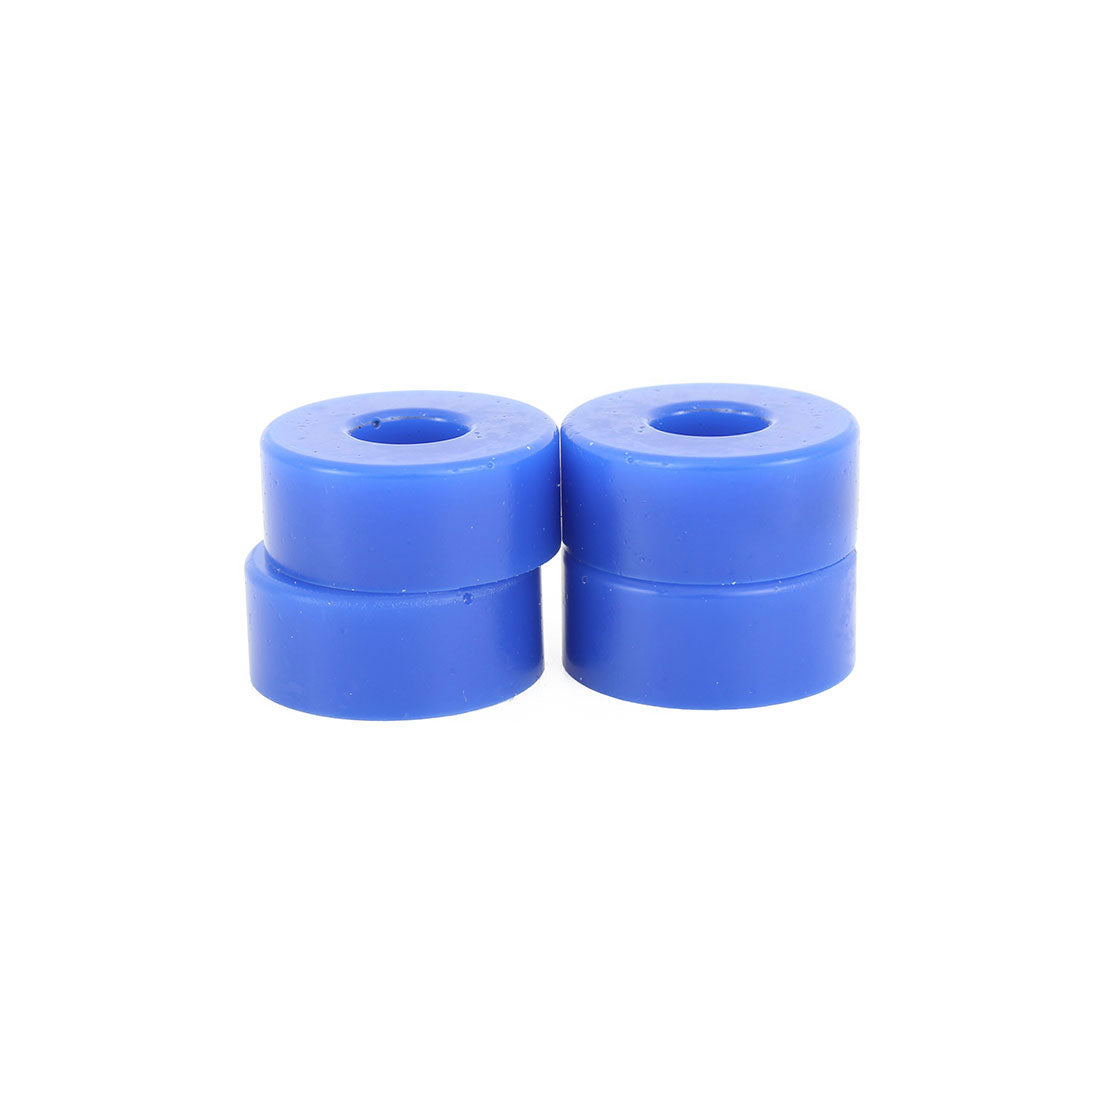 Corey Skates 90a Short Barrel Bushings 4pk - Blue Roller Skate Hardware and Parts